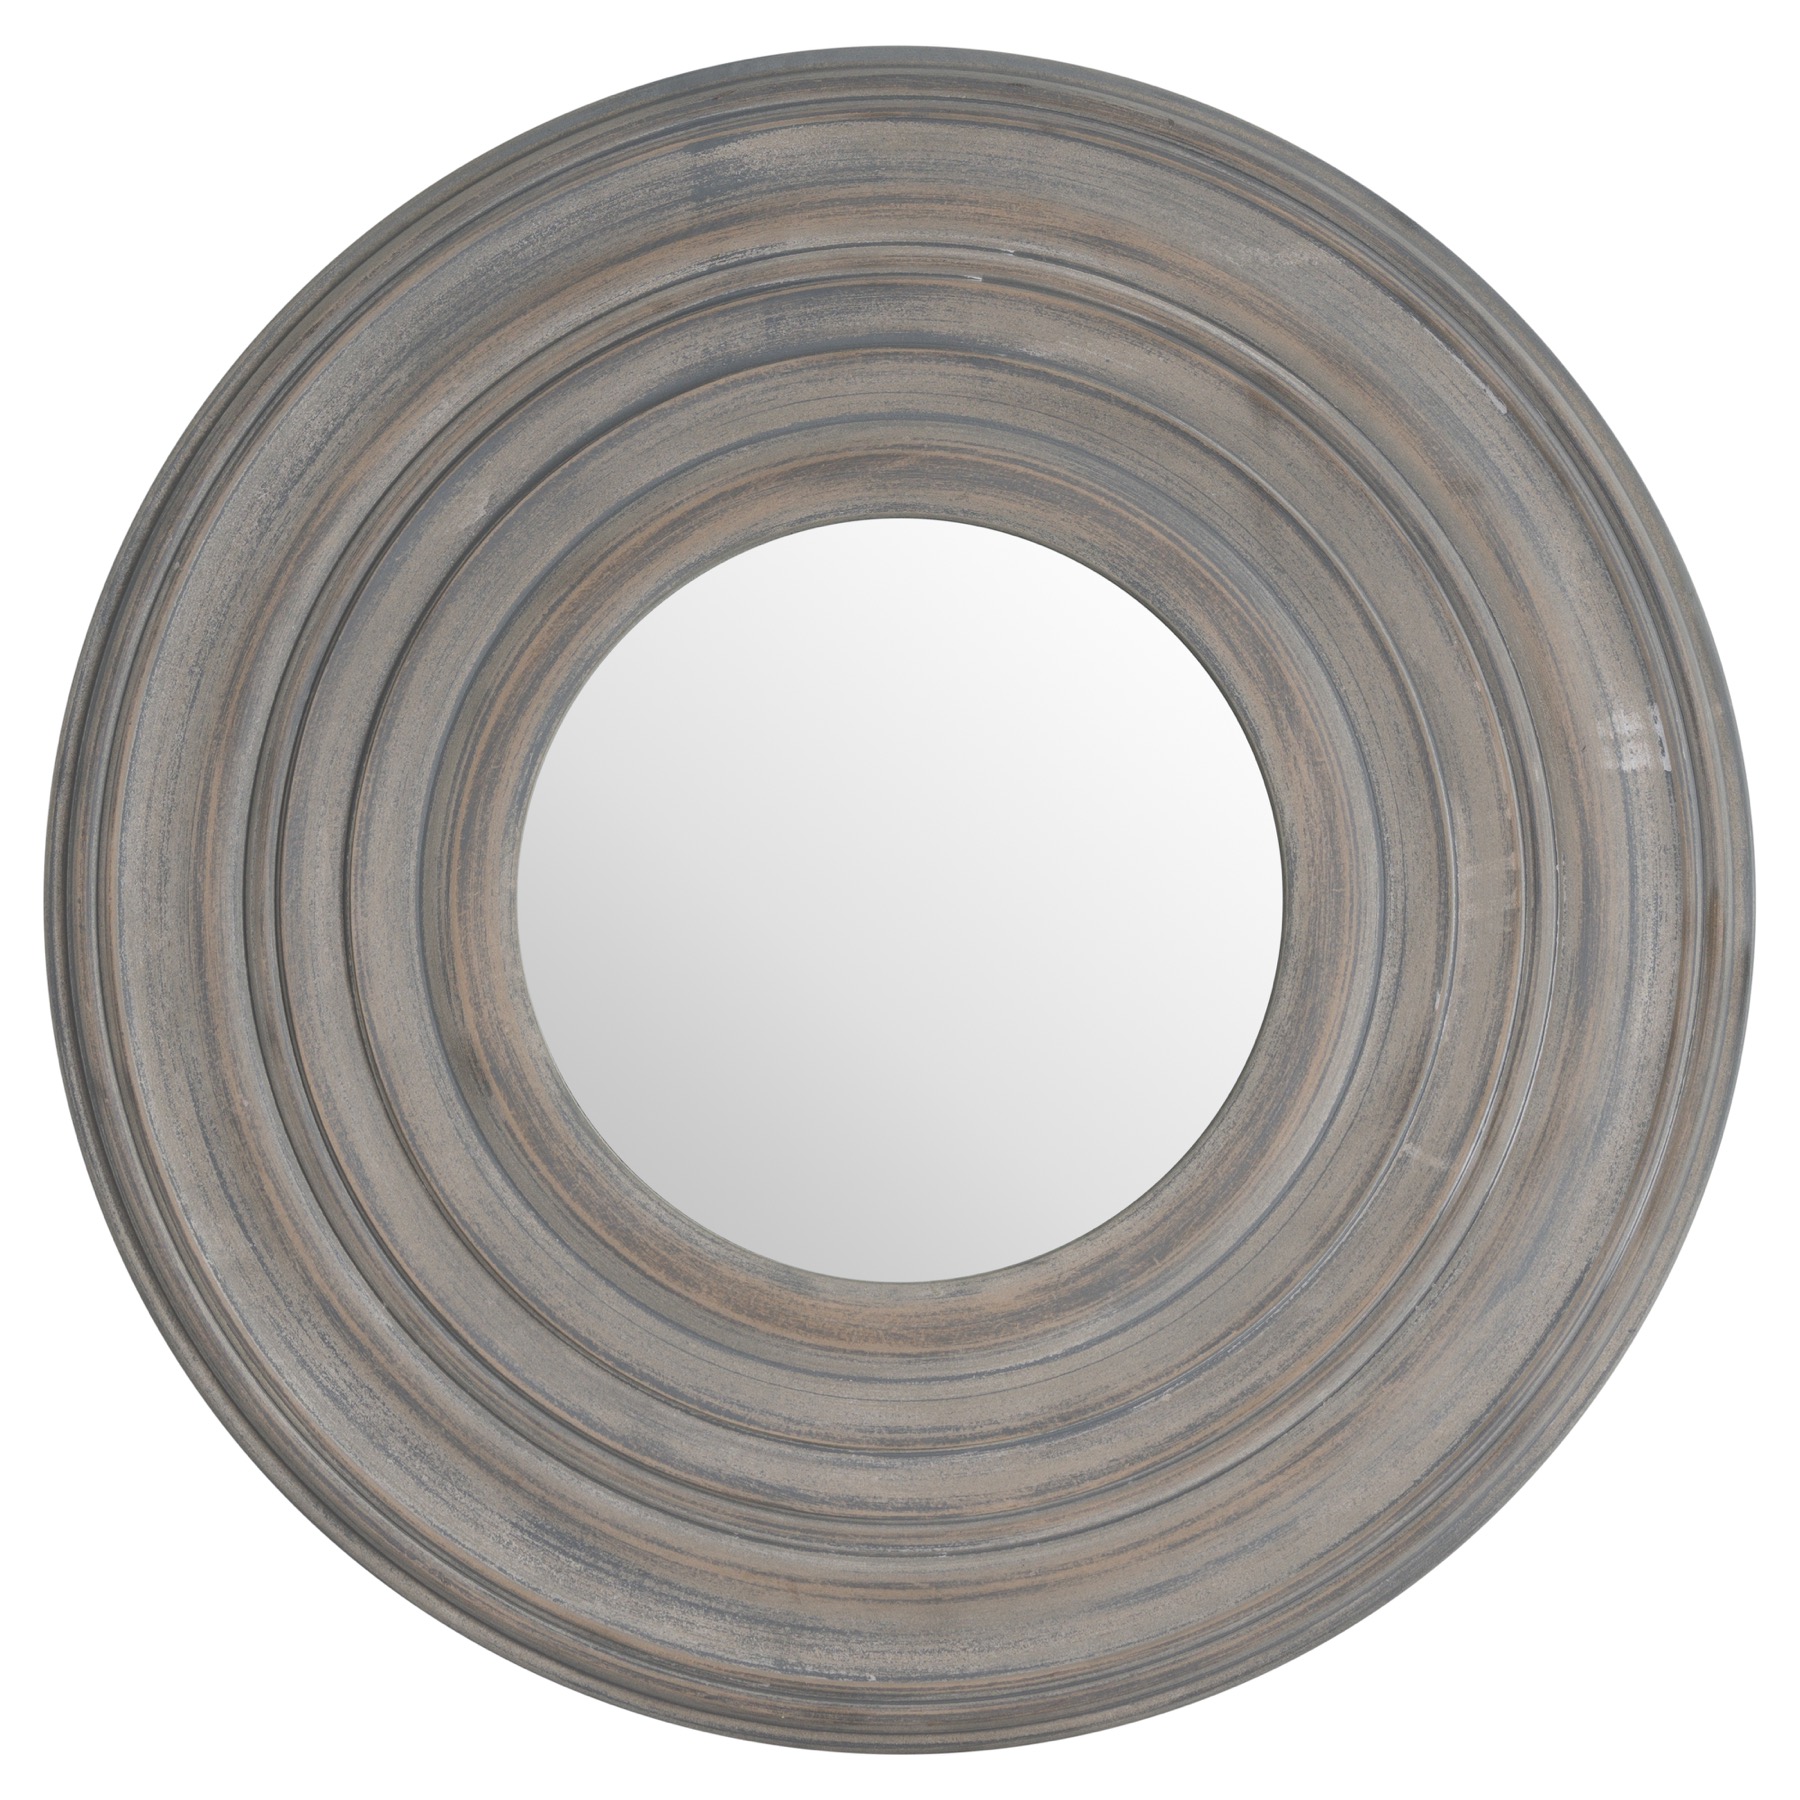 Grey Painted Round Textured Mirror - Image 1